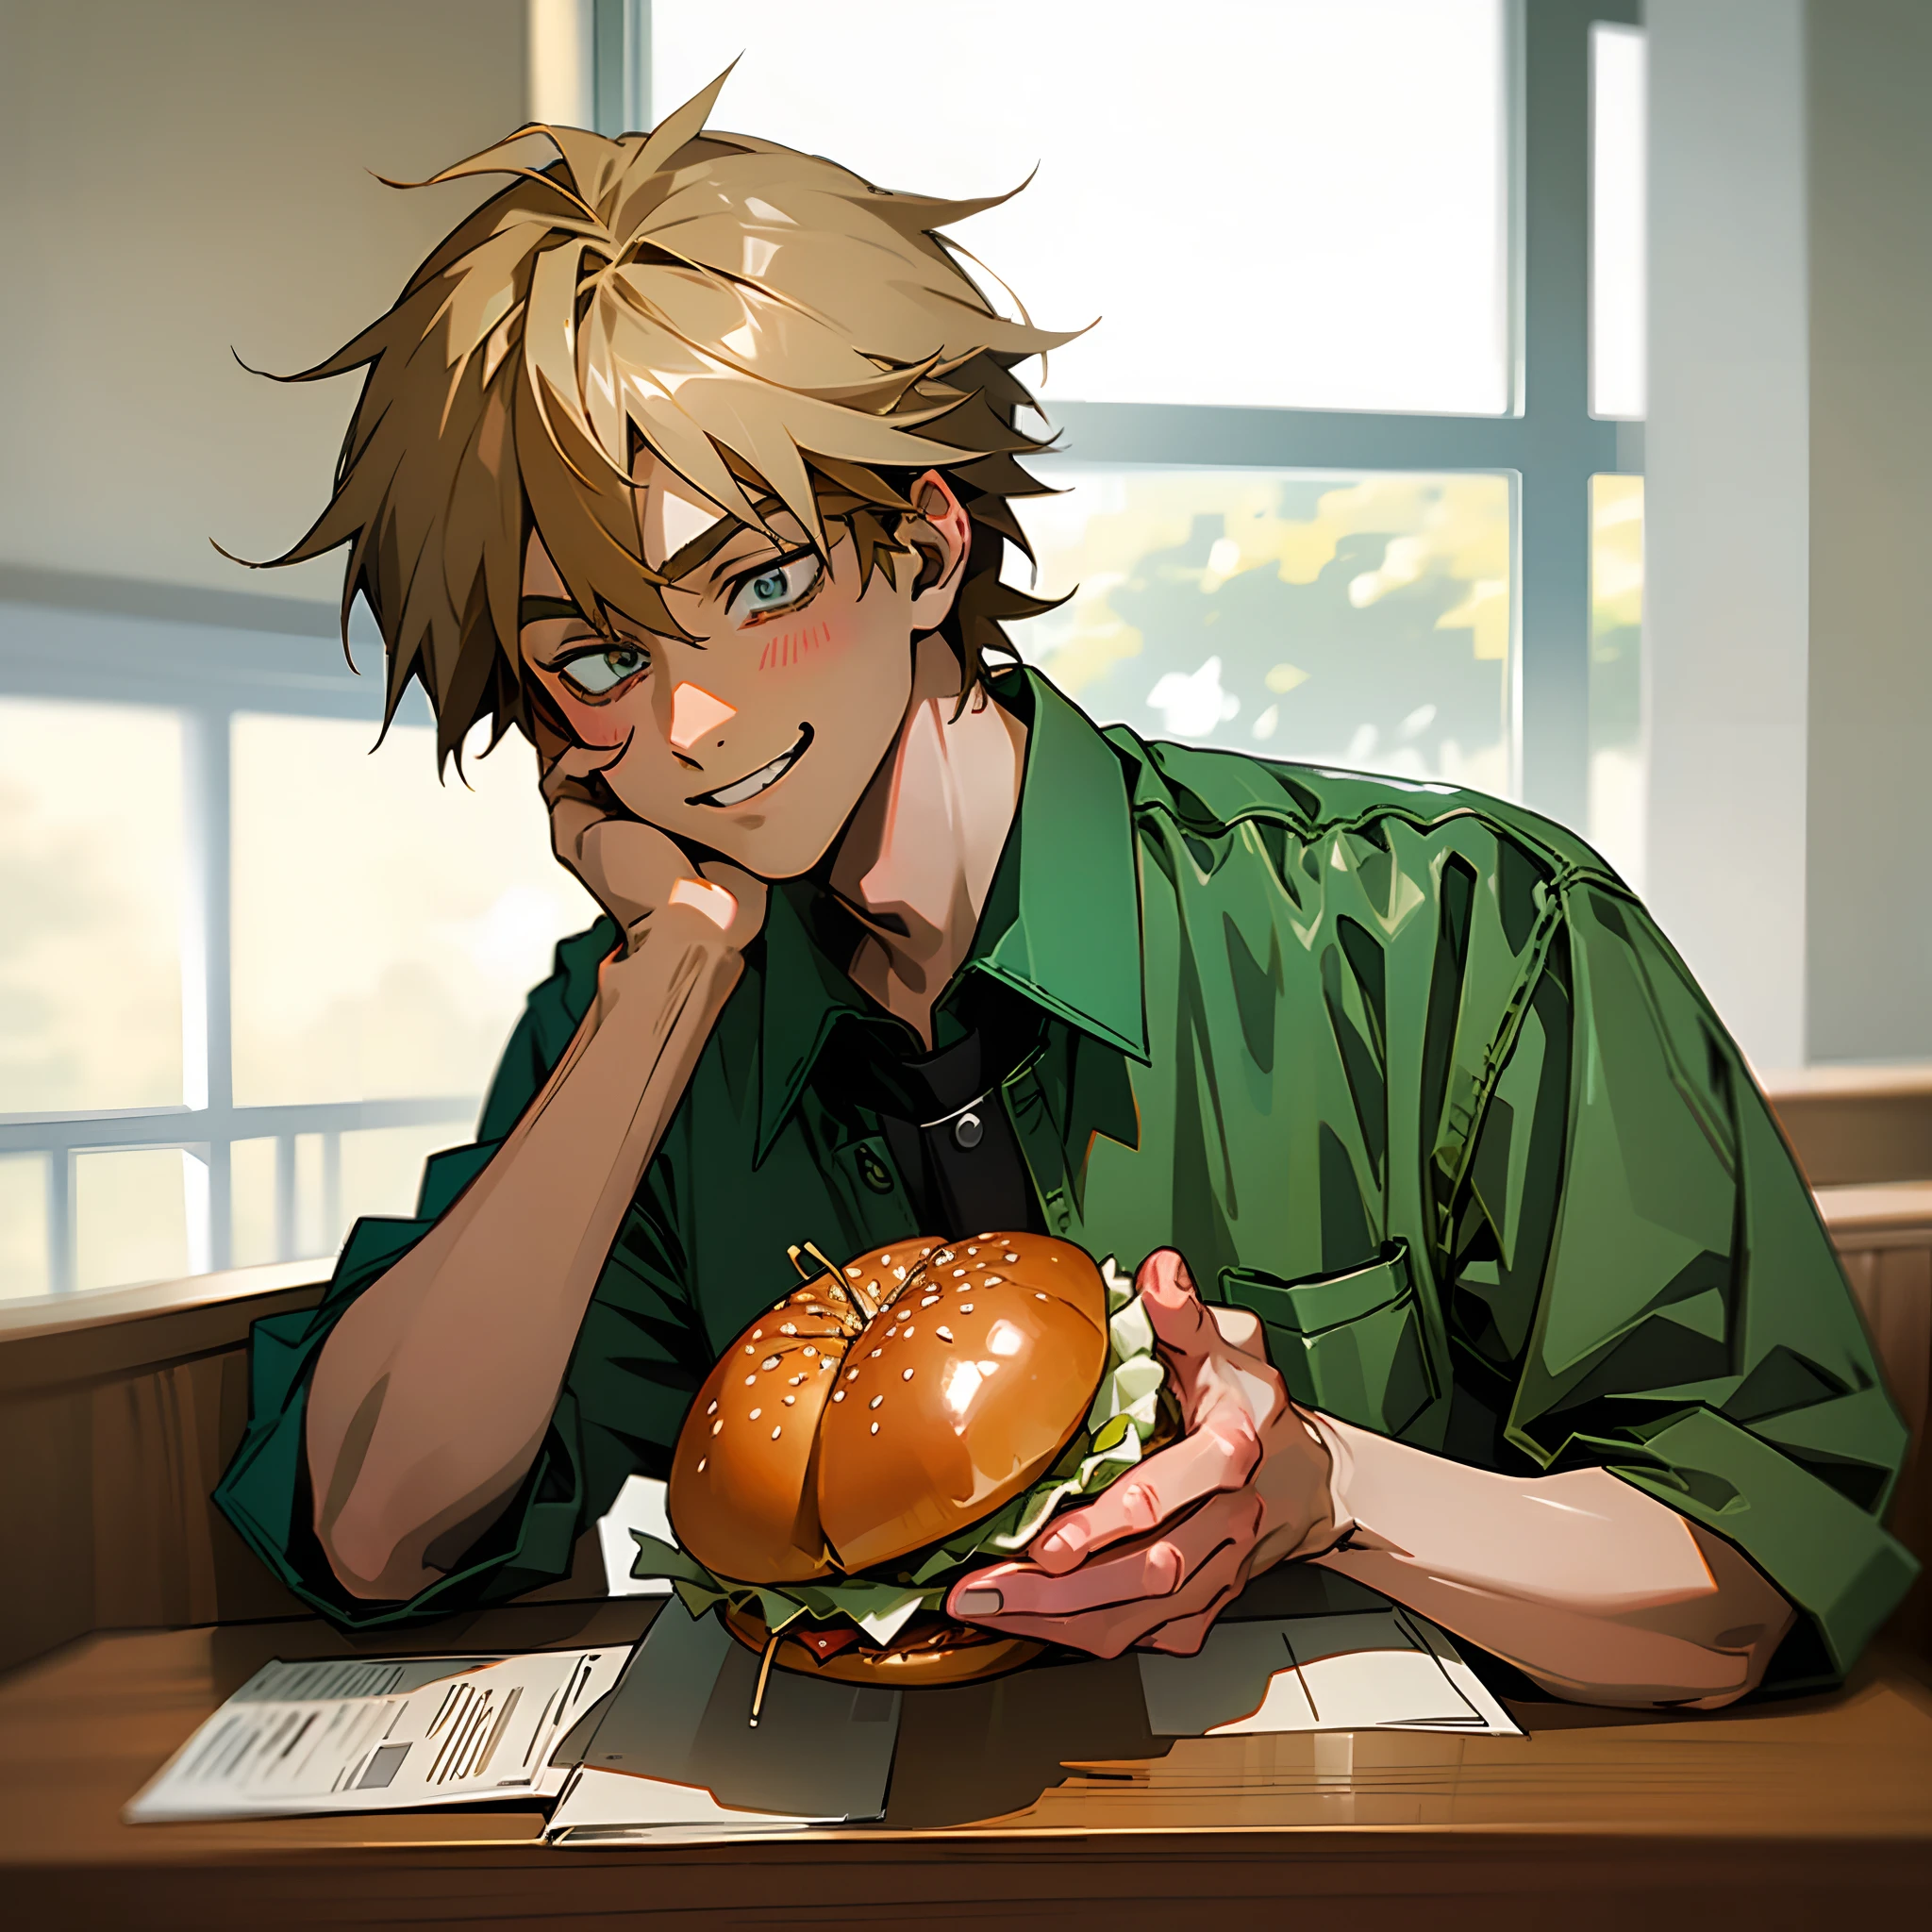 Burger box | Anime bento, Food illustration art, Cute food drawings